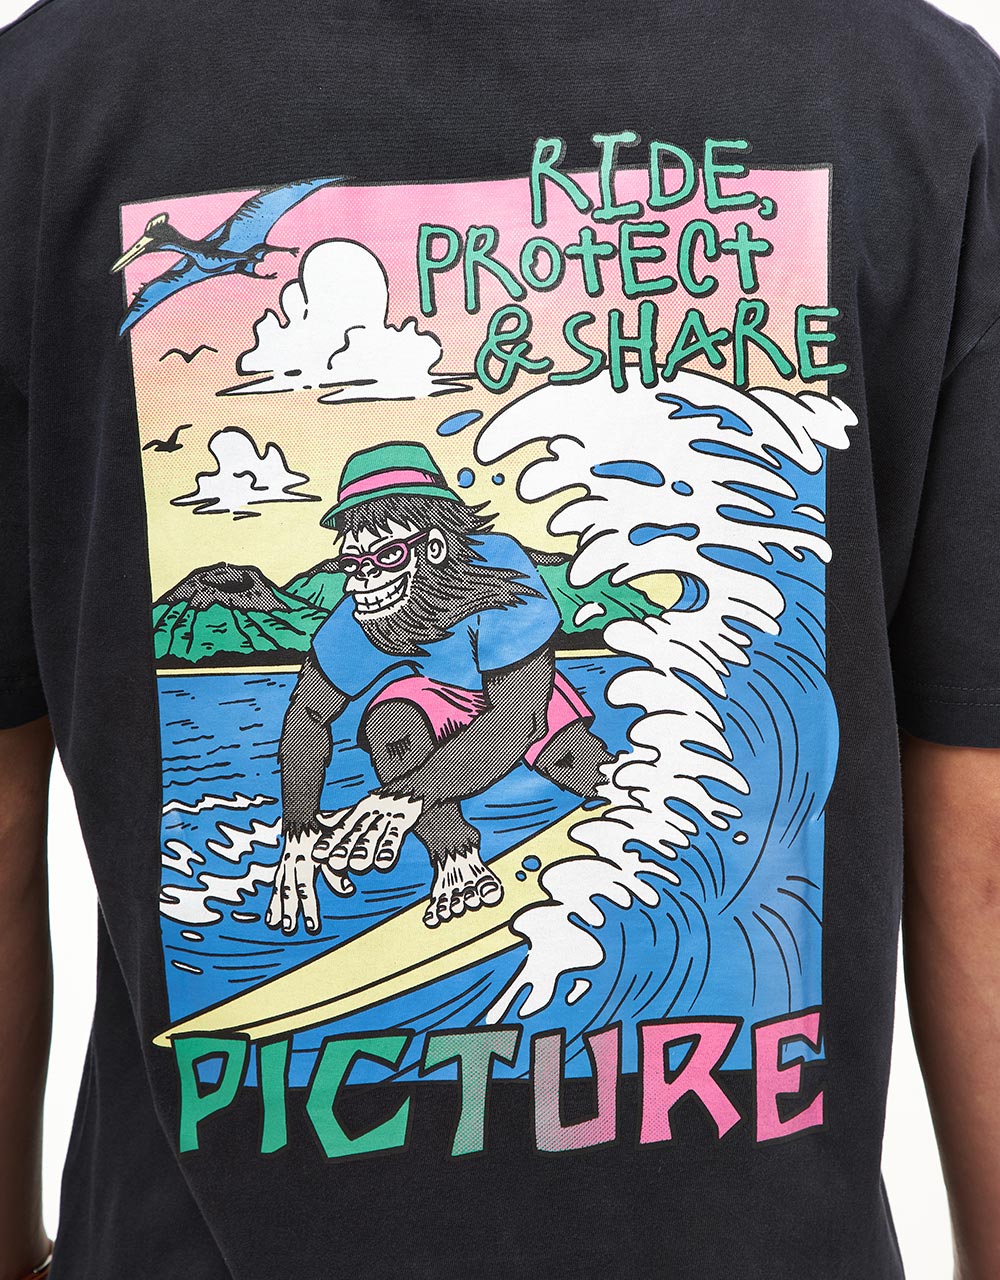 Picture Tsunami Organic T-Shirt - Black Washed